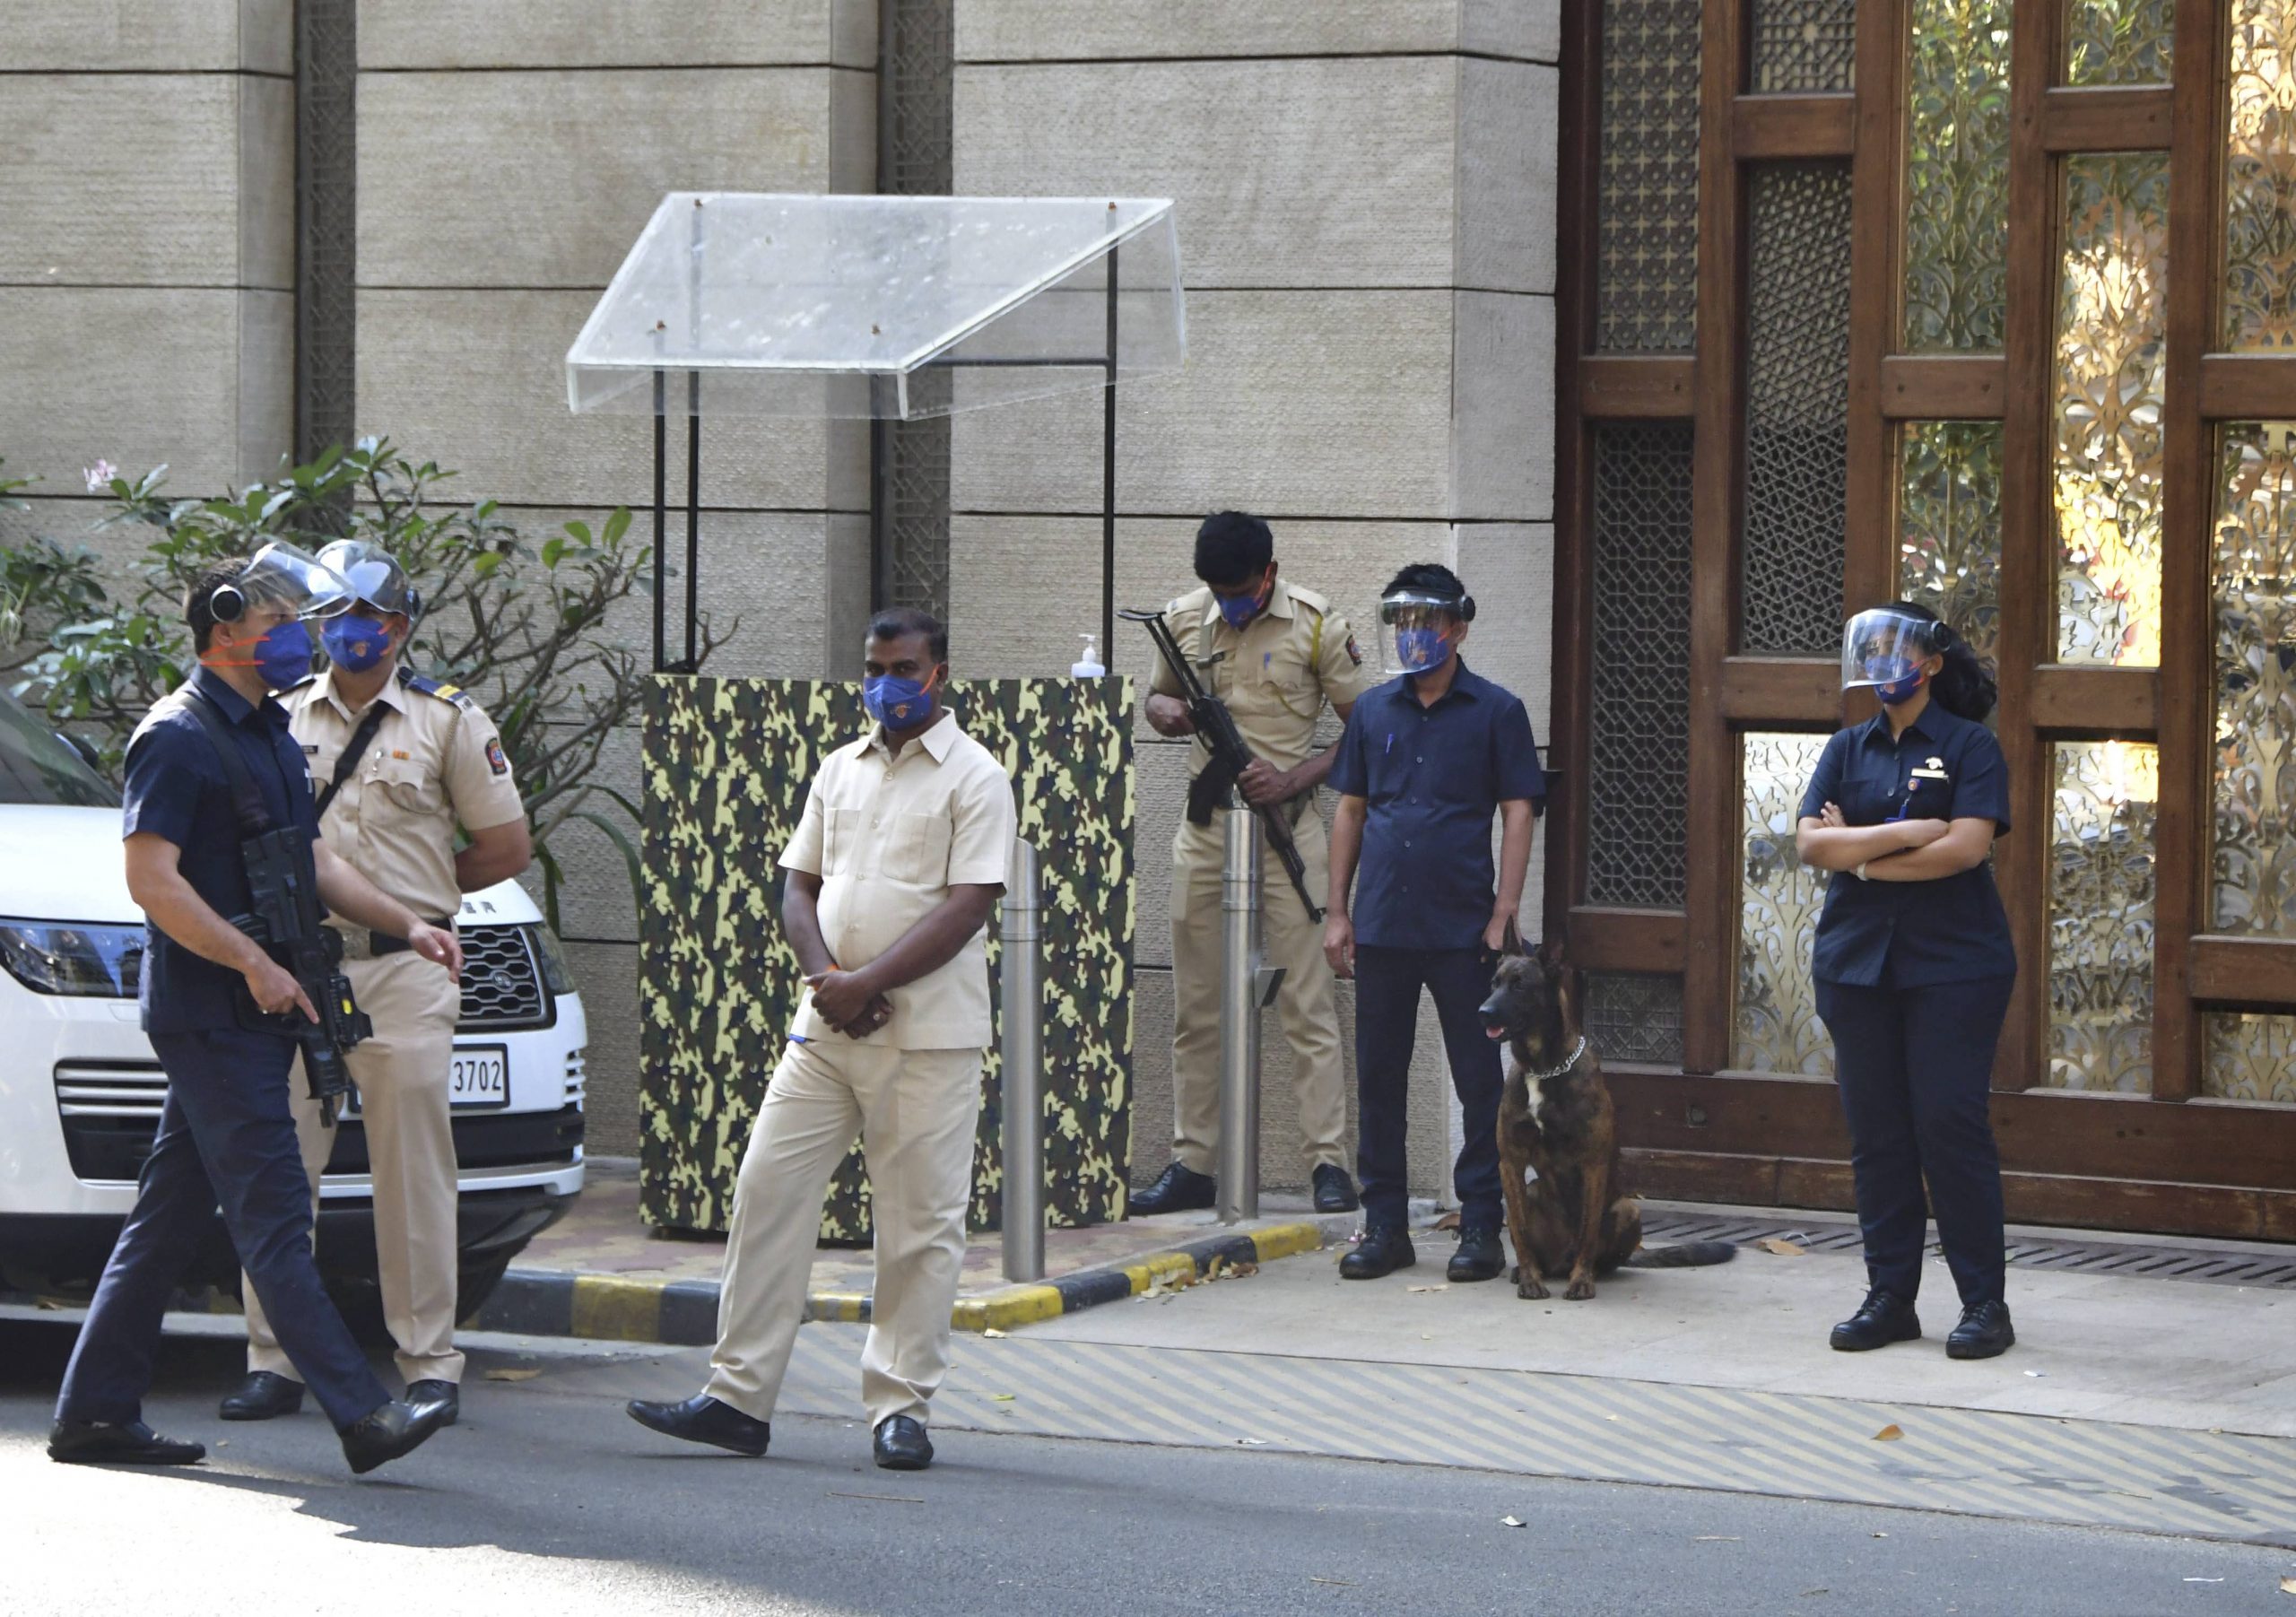 Mukesh Ambani bomb scare case: What we know so far